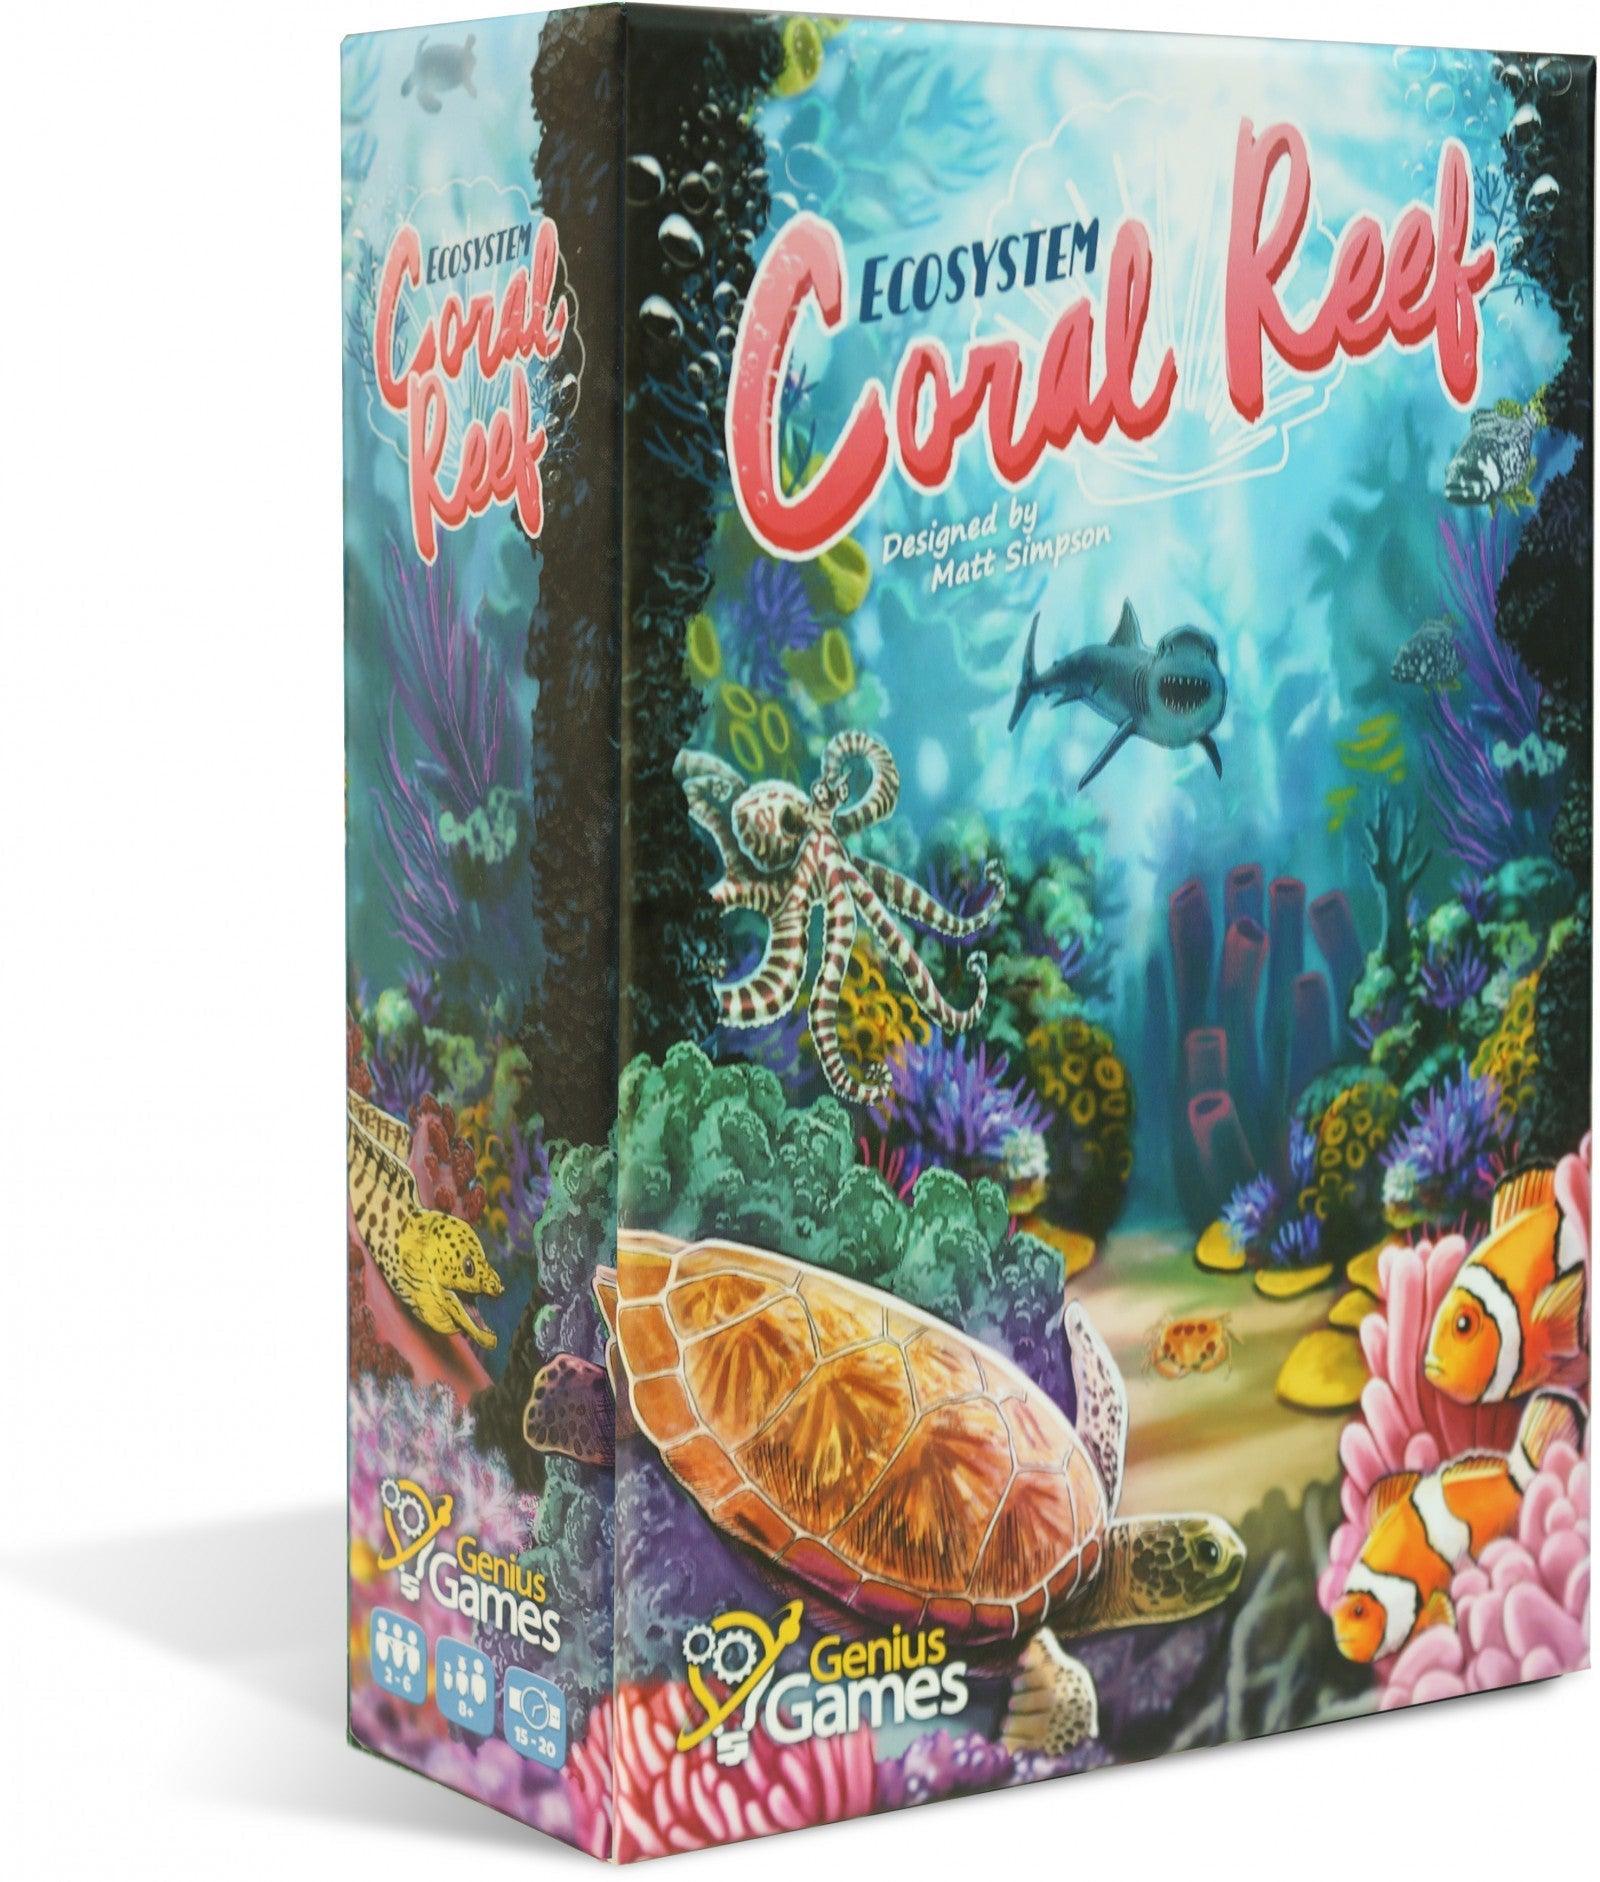 VR-98210 Ecosystem: Coral Reef - Genius Games - Titan Pop Culture